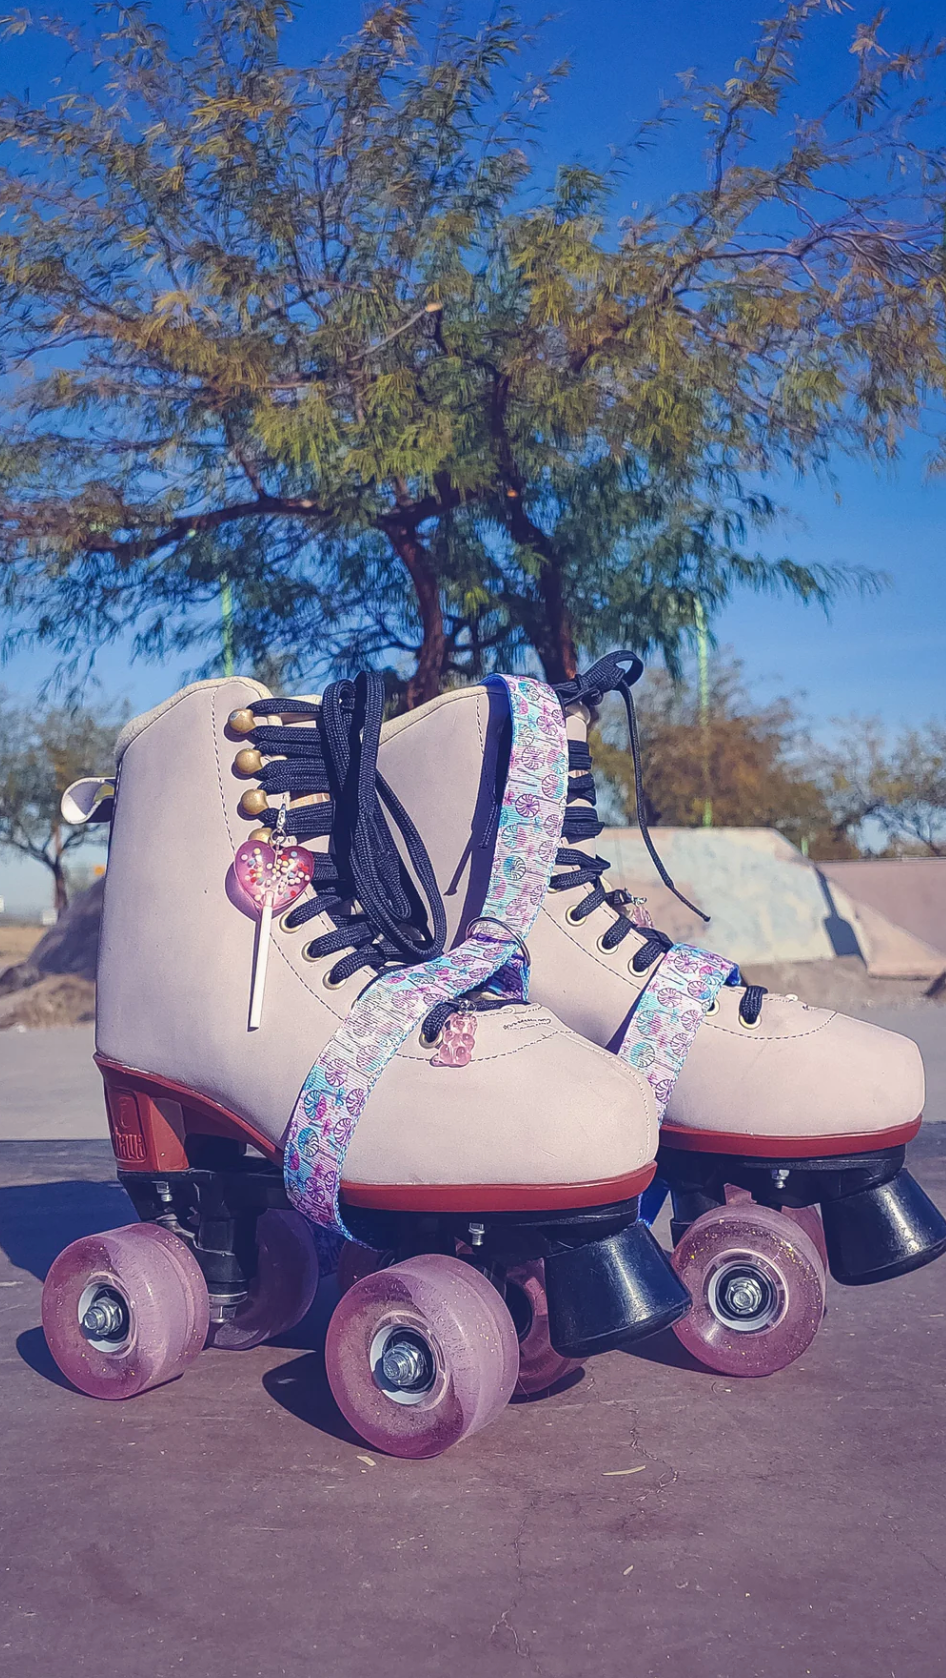 Swirl Lollipops Blue Roller Skate Leash with D Rings - Adjustable - Yoga Mat Strap - Skateboard Sling - Artist Sonch Curiosities